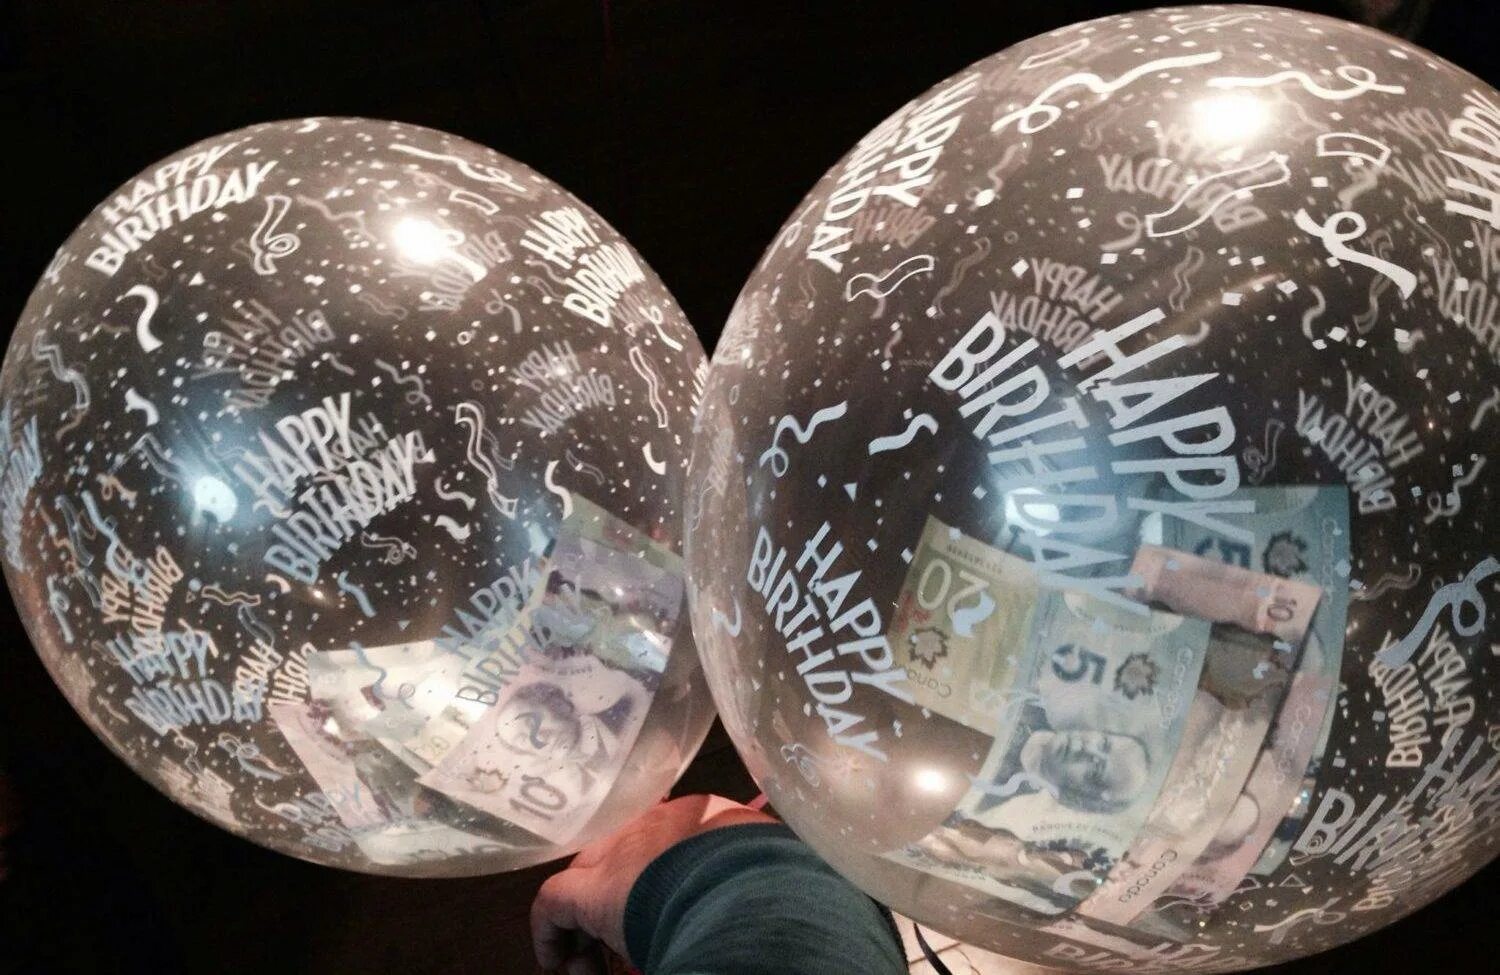 Прозрачный шар с деньгами. Шар с деньгами внутри. Прозрачный шар с деньгами внутри. Воздушный шар с деньгами.